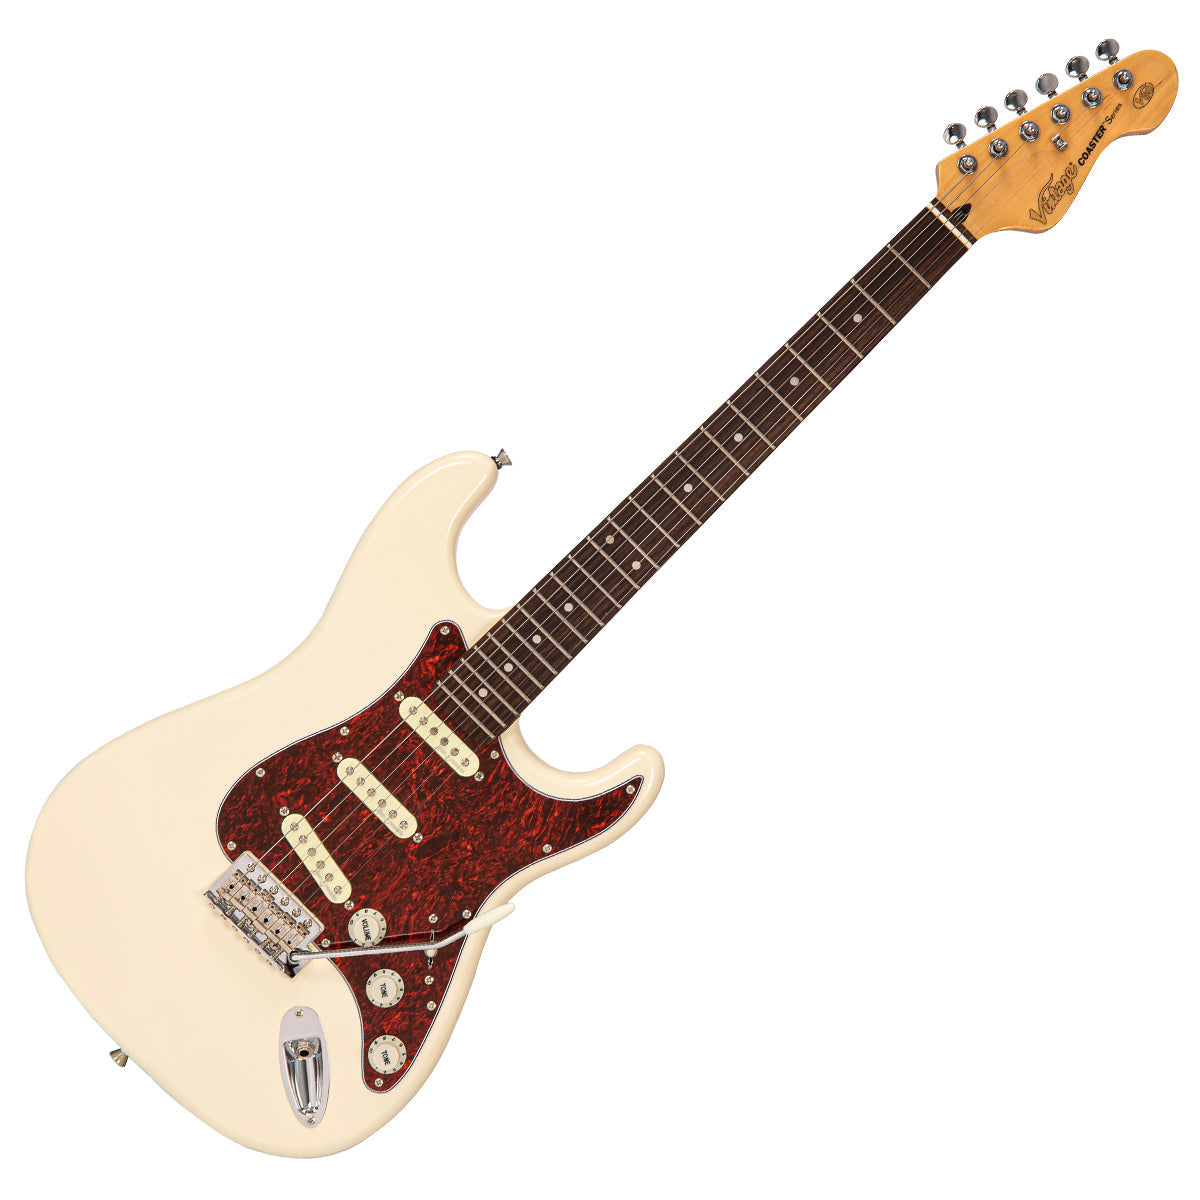 Vintage V60 Coaster Series Electric Guitar ~ Vintage White, Electric Guitar for sale at Richards Guitars.